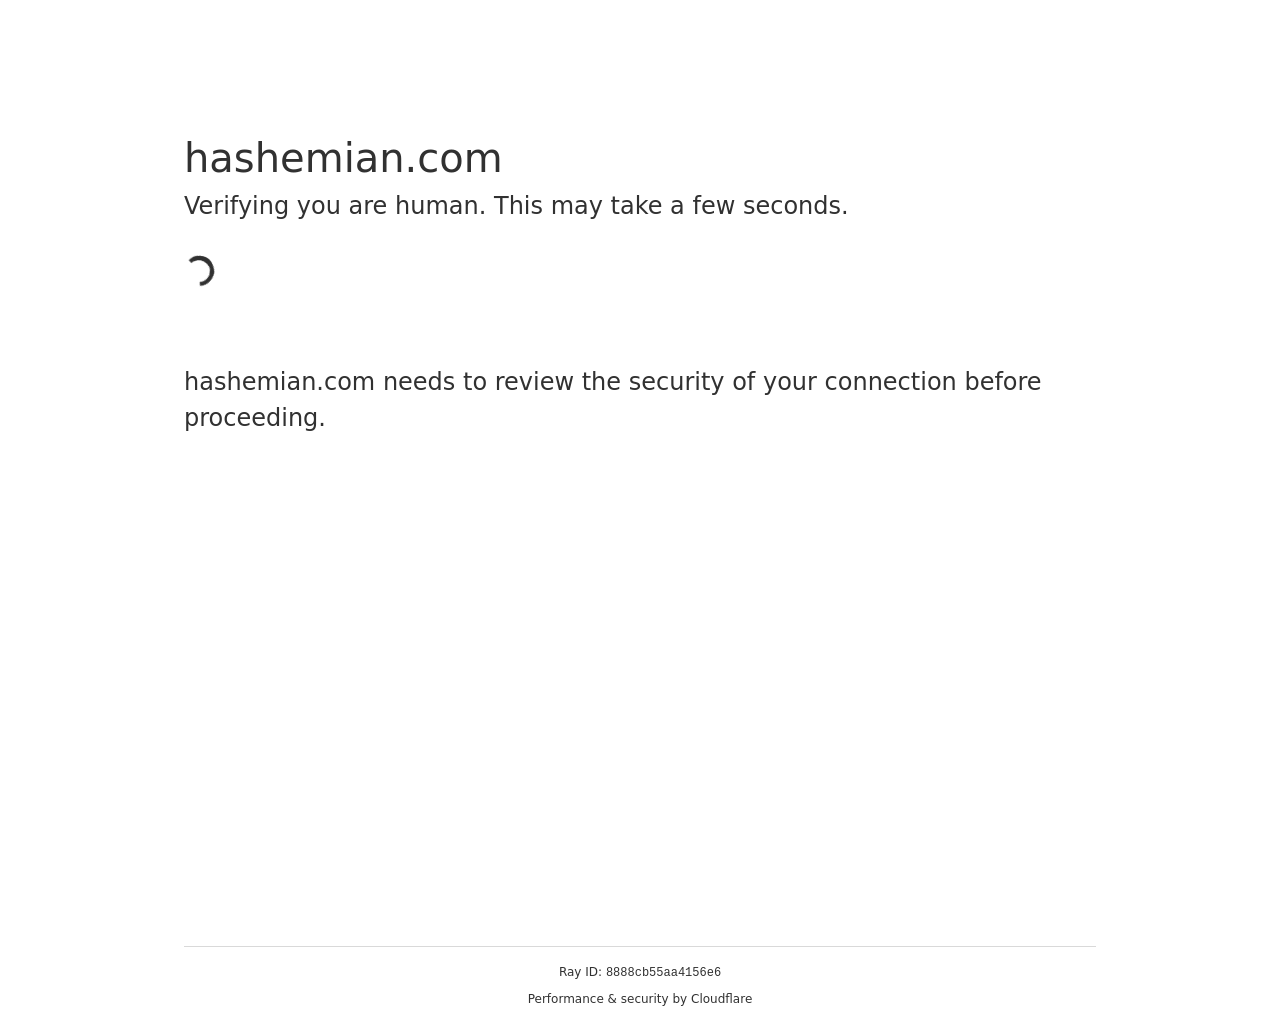 hashemian.com